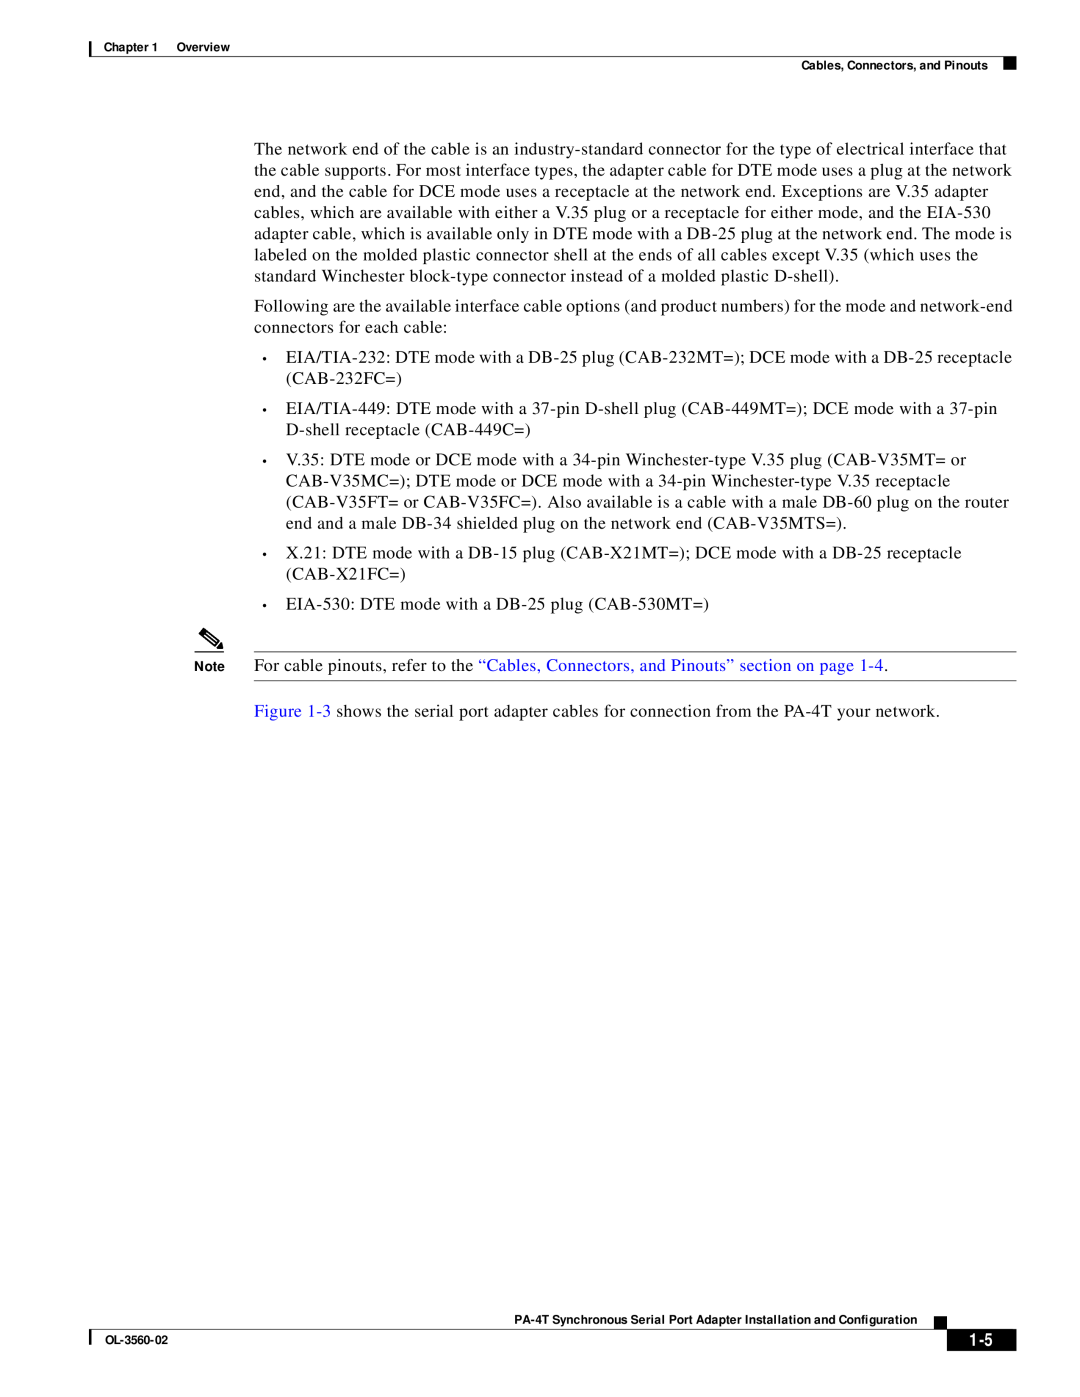 Cisco Systems OL-3560-02 manual EIA-530 DTE mode with a DB-25 plug CAB-530MT= 